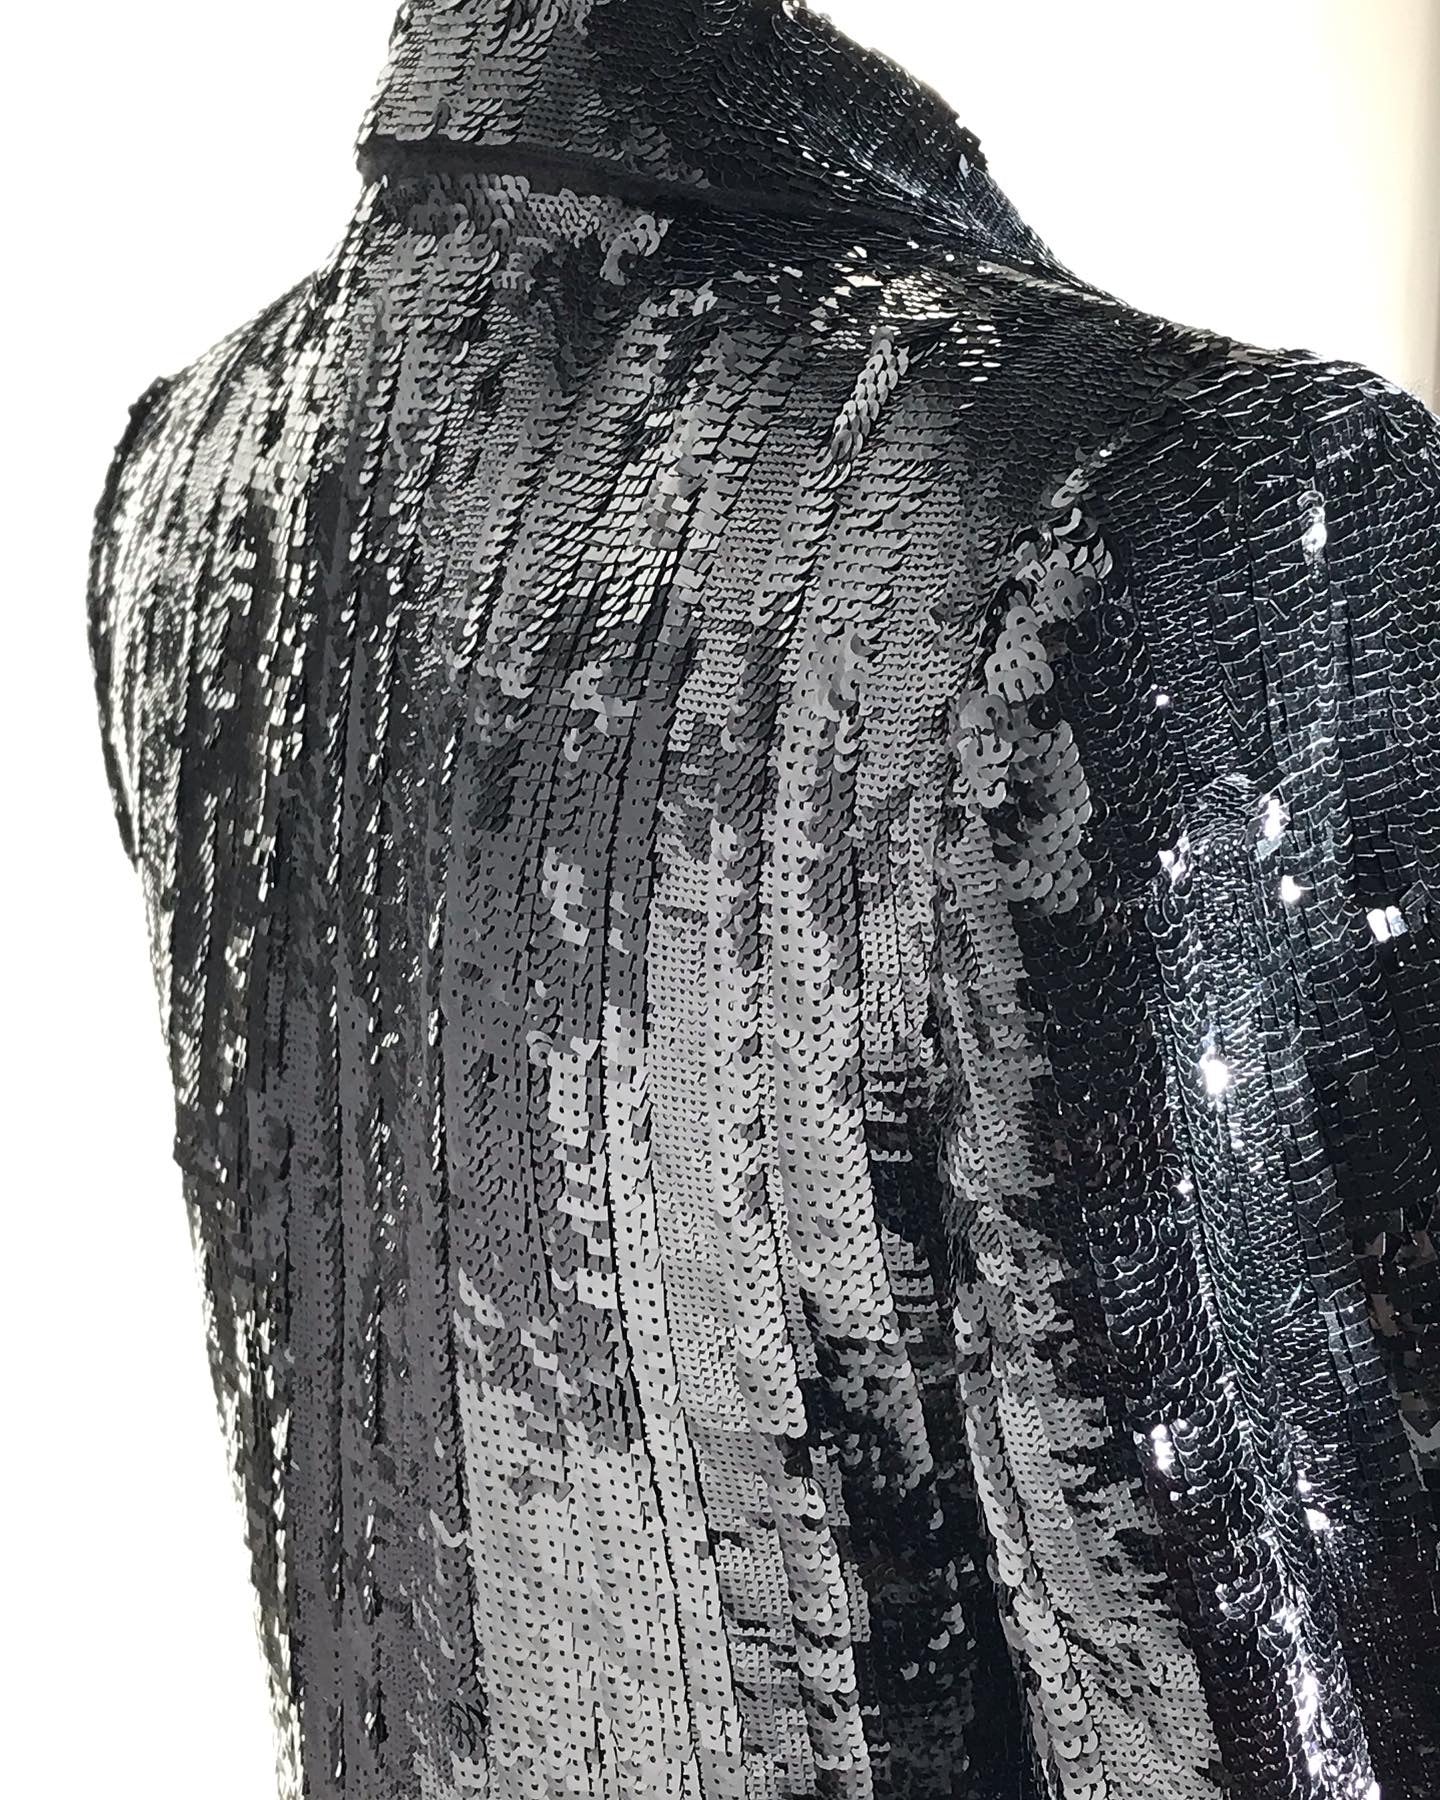 8. Saint Laurent double-breasted black embroidered tuxedo jacket